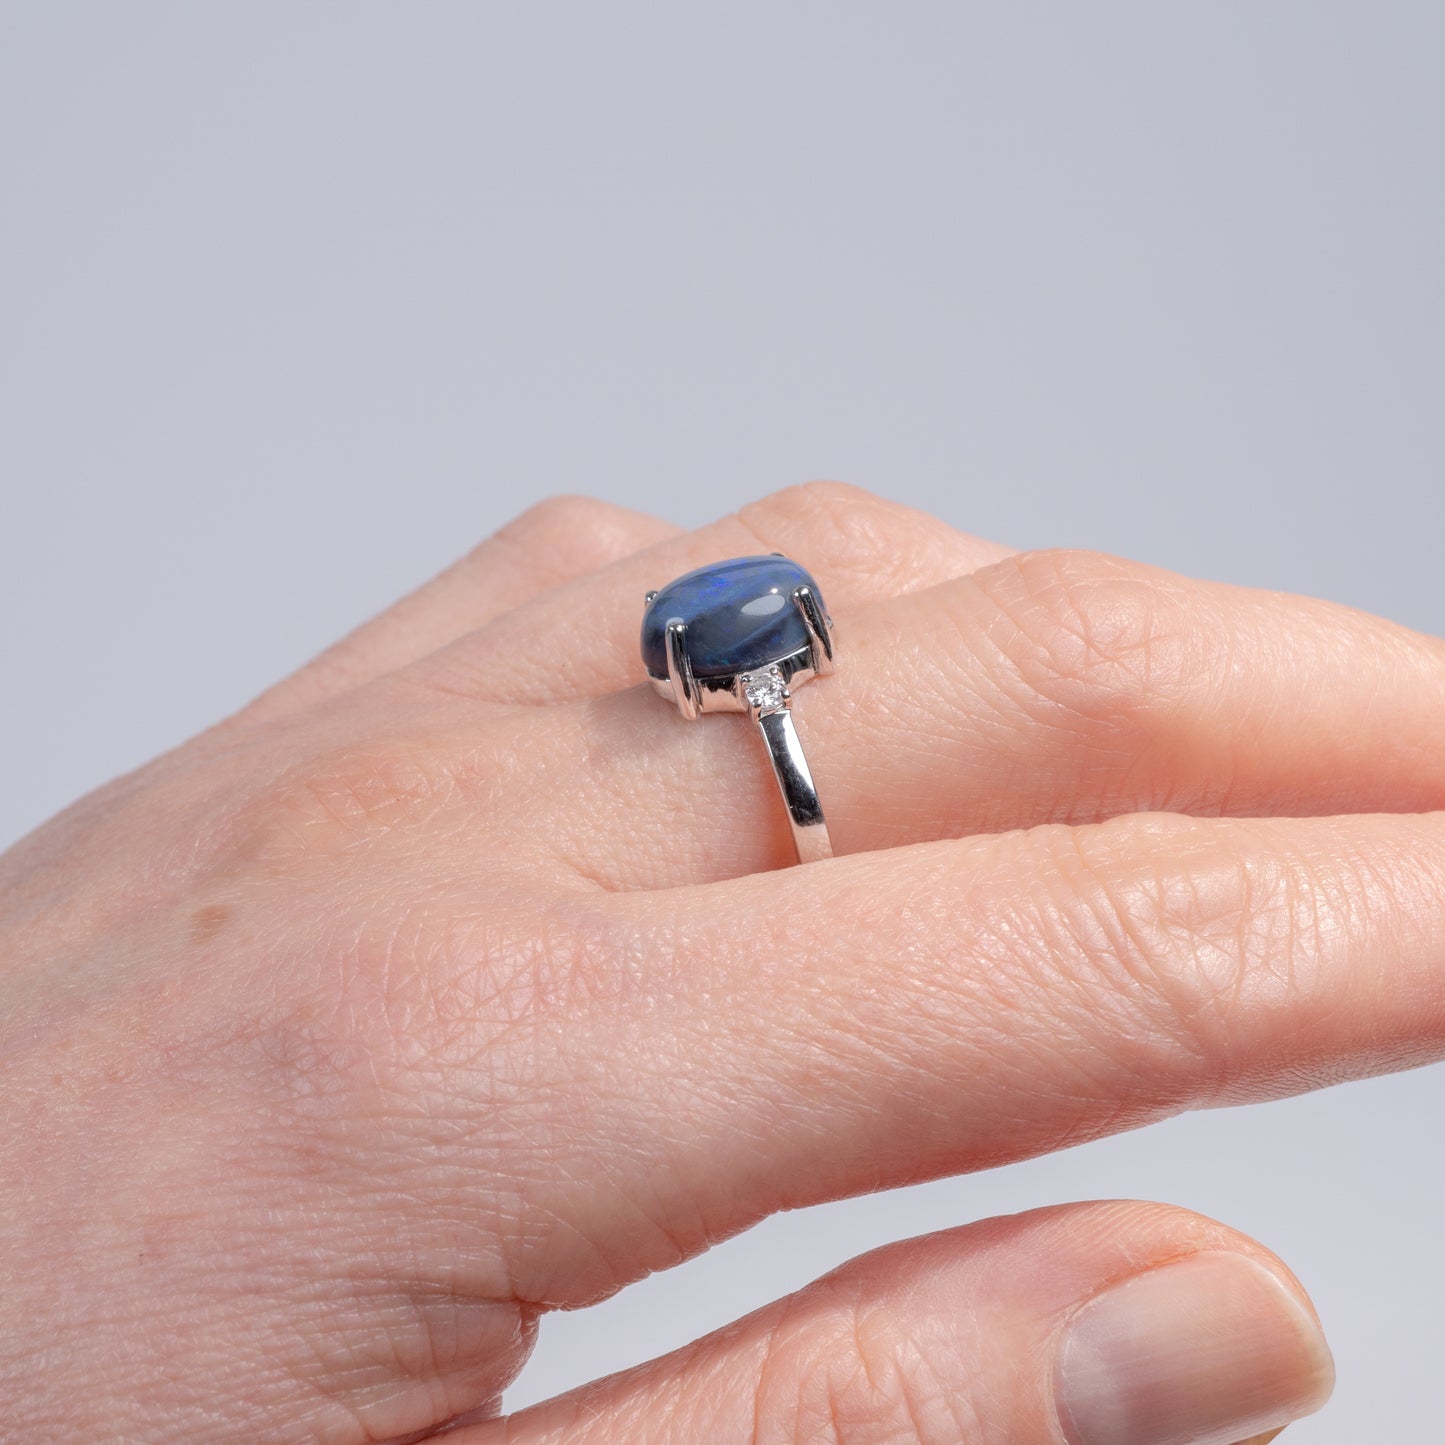 Australian Blue Opal & Diamond Ring 18K White Gold-Gemstone Rings-Hunters Fine Jewellery